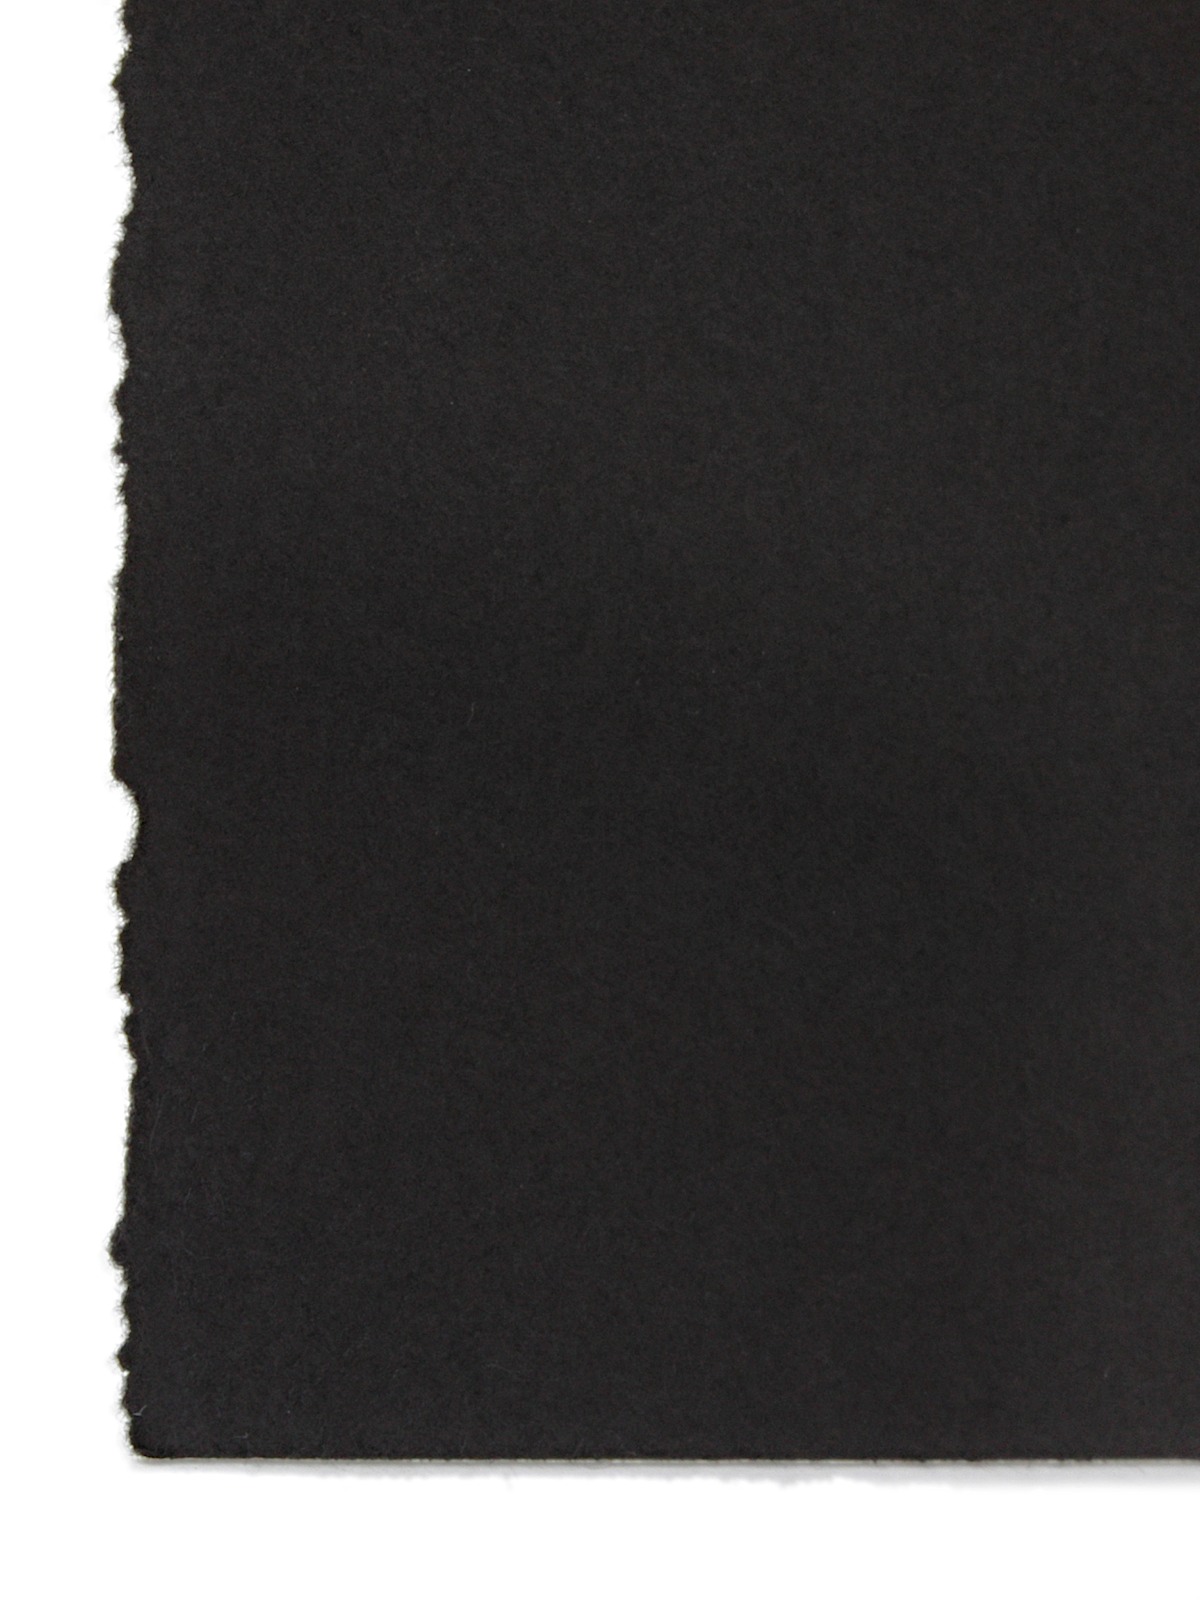 Cover Printmaking Paper Black 22 In. X 30 In. Sheet